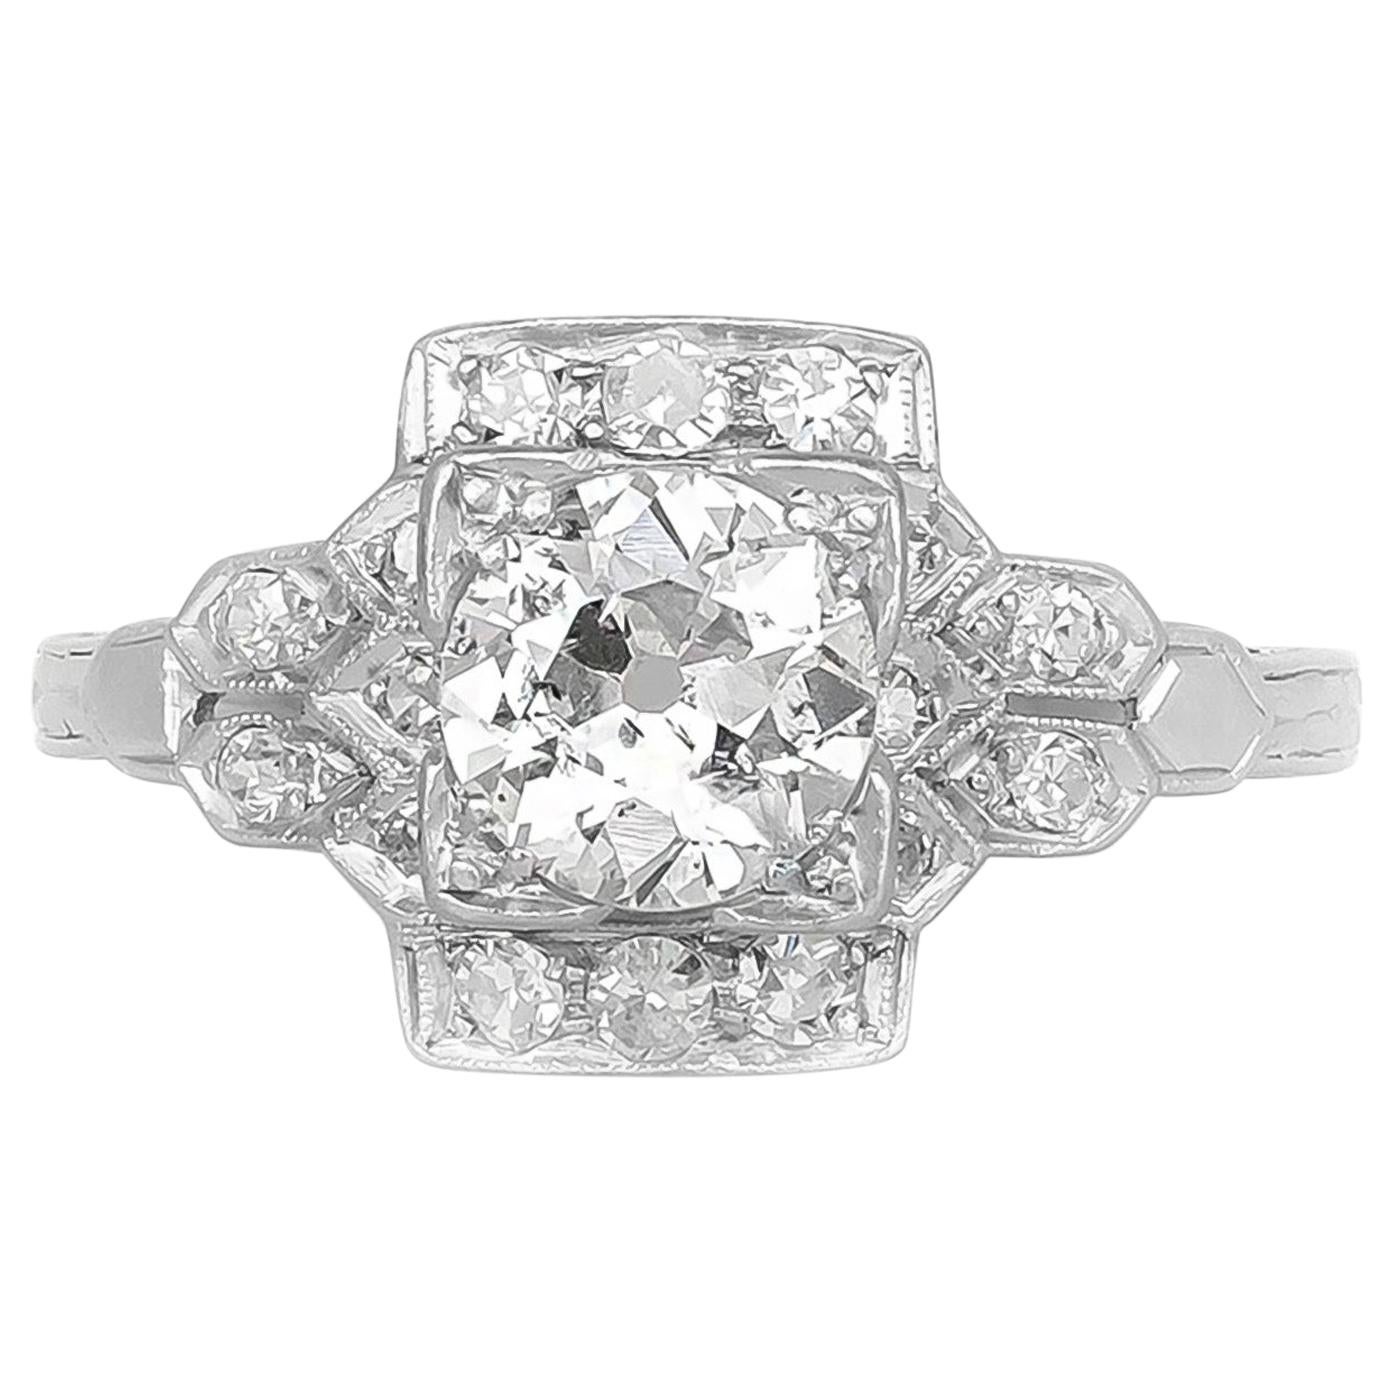 1920s-1930s Center Round Diamond Engagement Ring